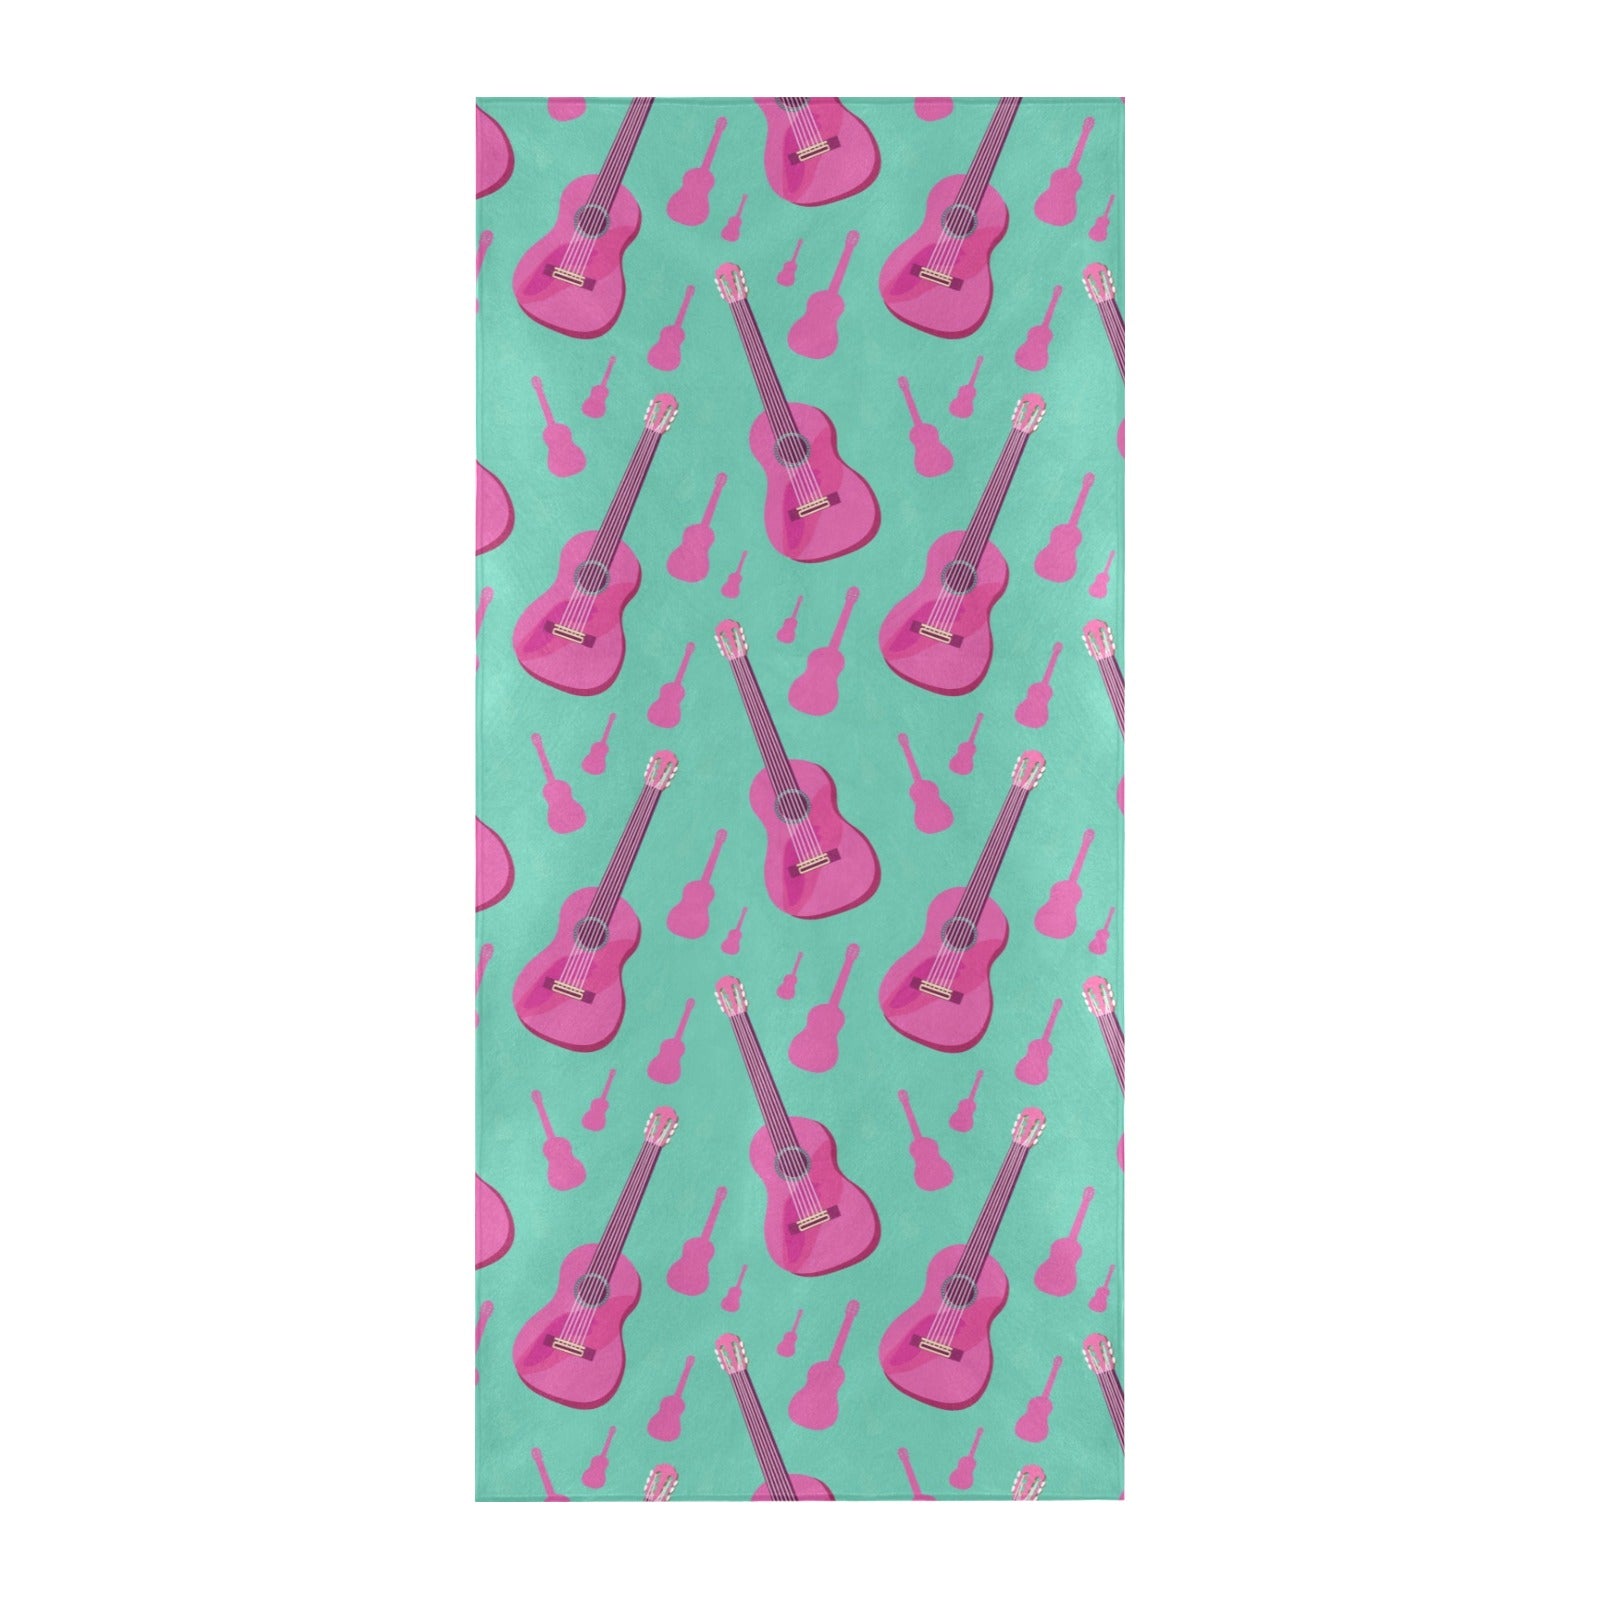 Acoustic Guitar Print Design LKS405 Beach Towel 32" x 71"